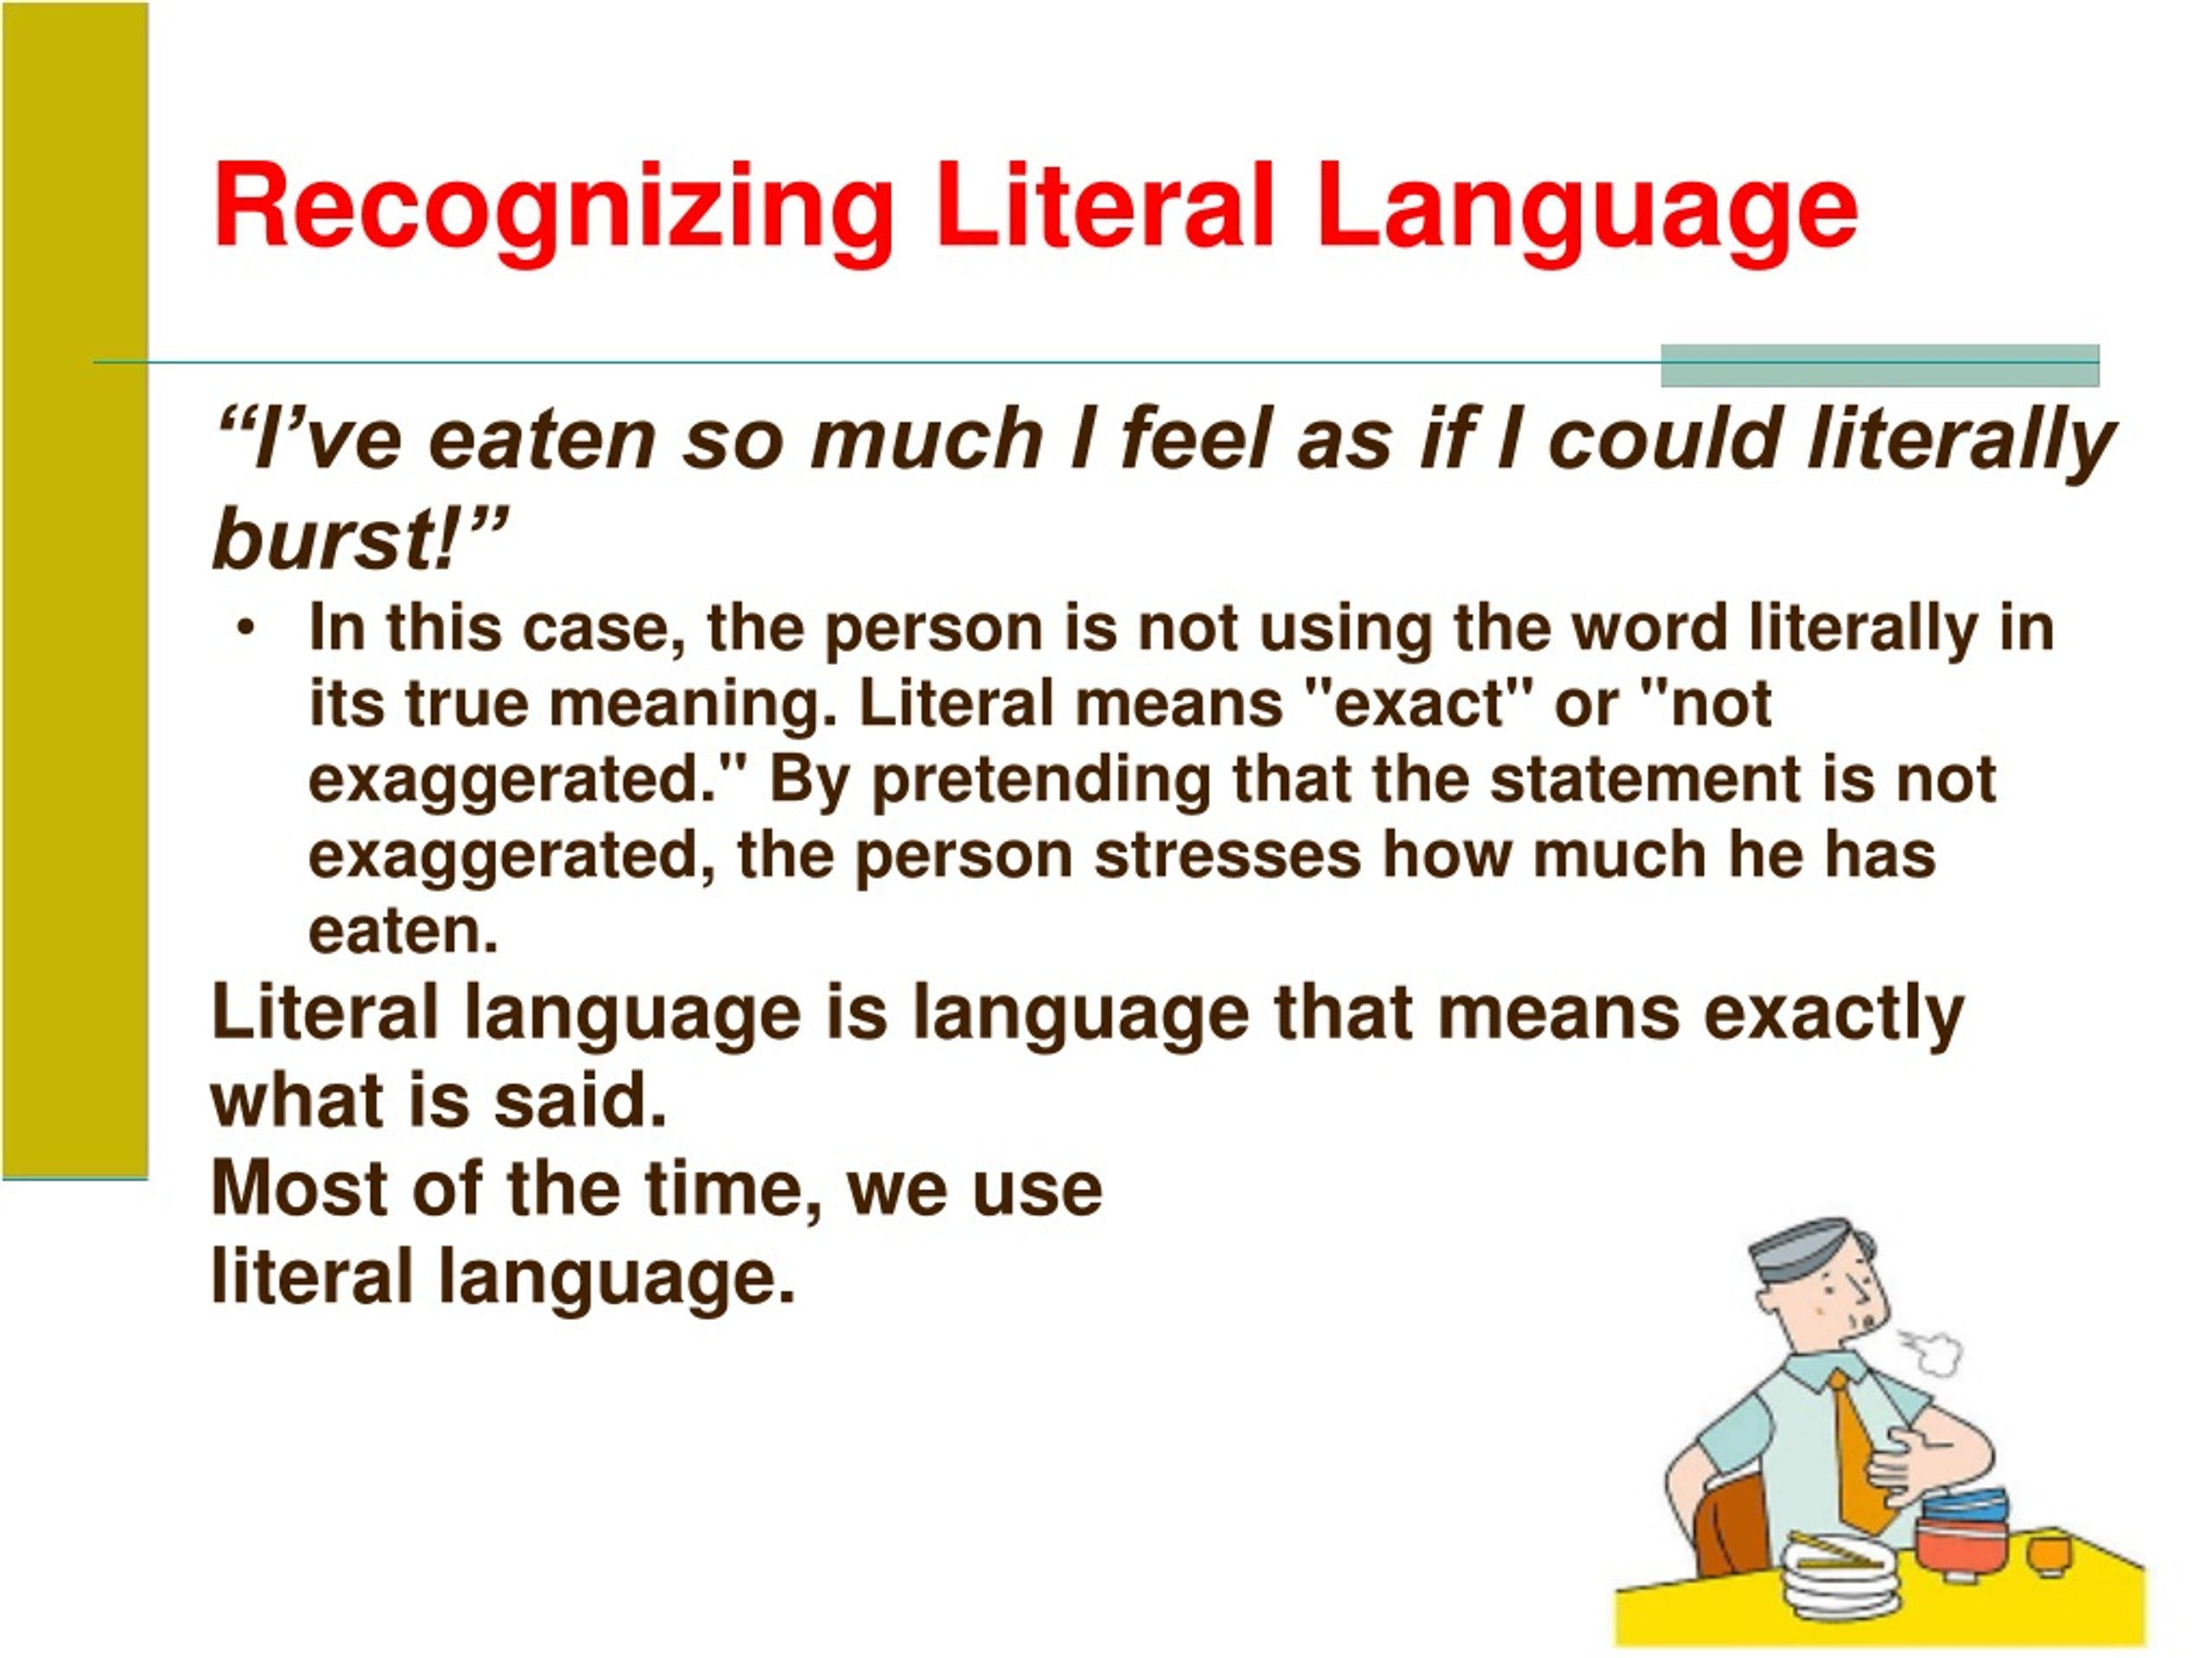 Language and presentation - pretending